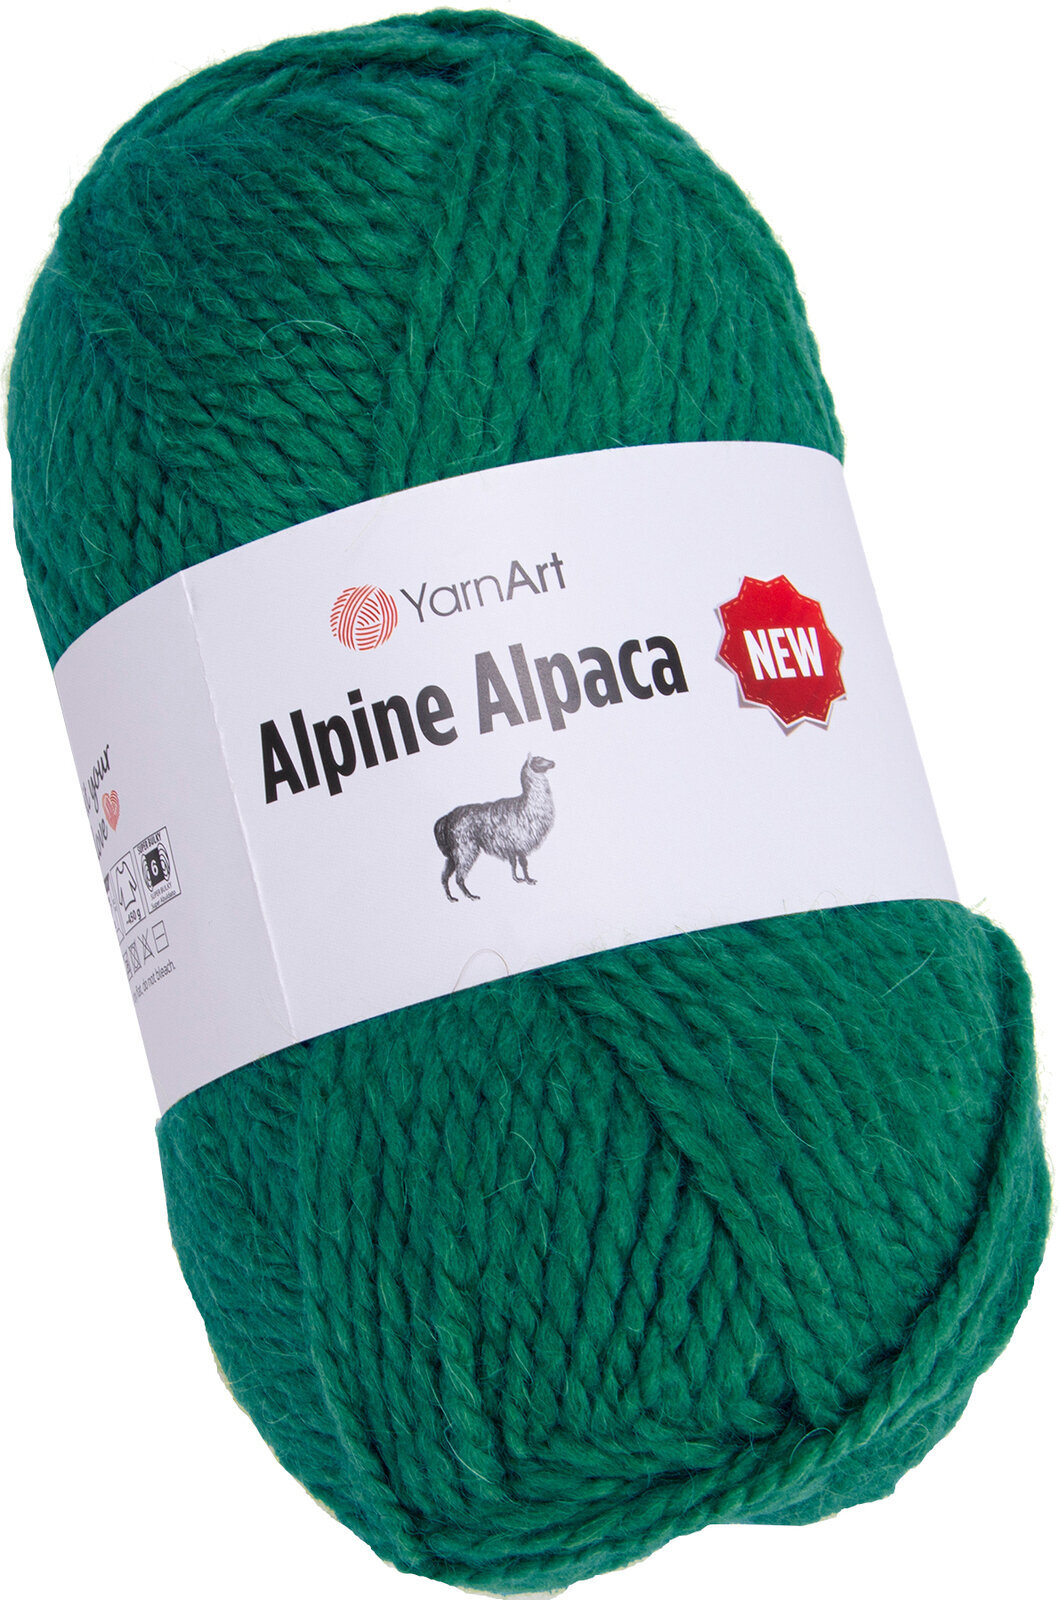 Breigaren Yarn Art Alpine Alpaca New 1449 Breigaren